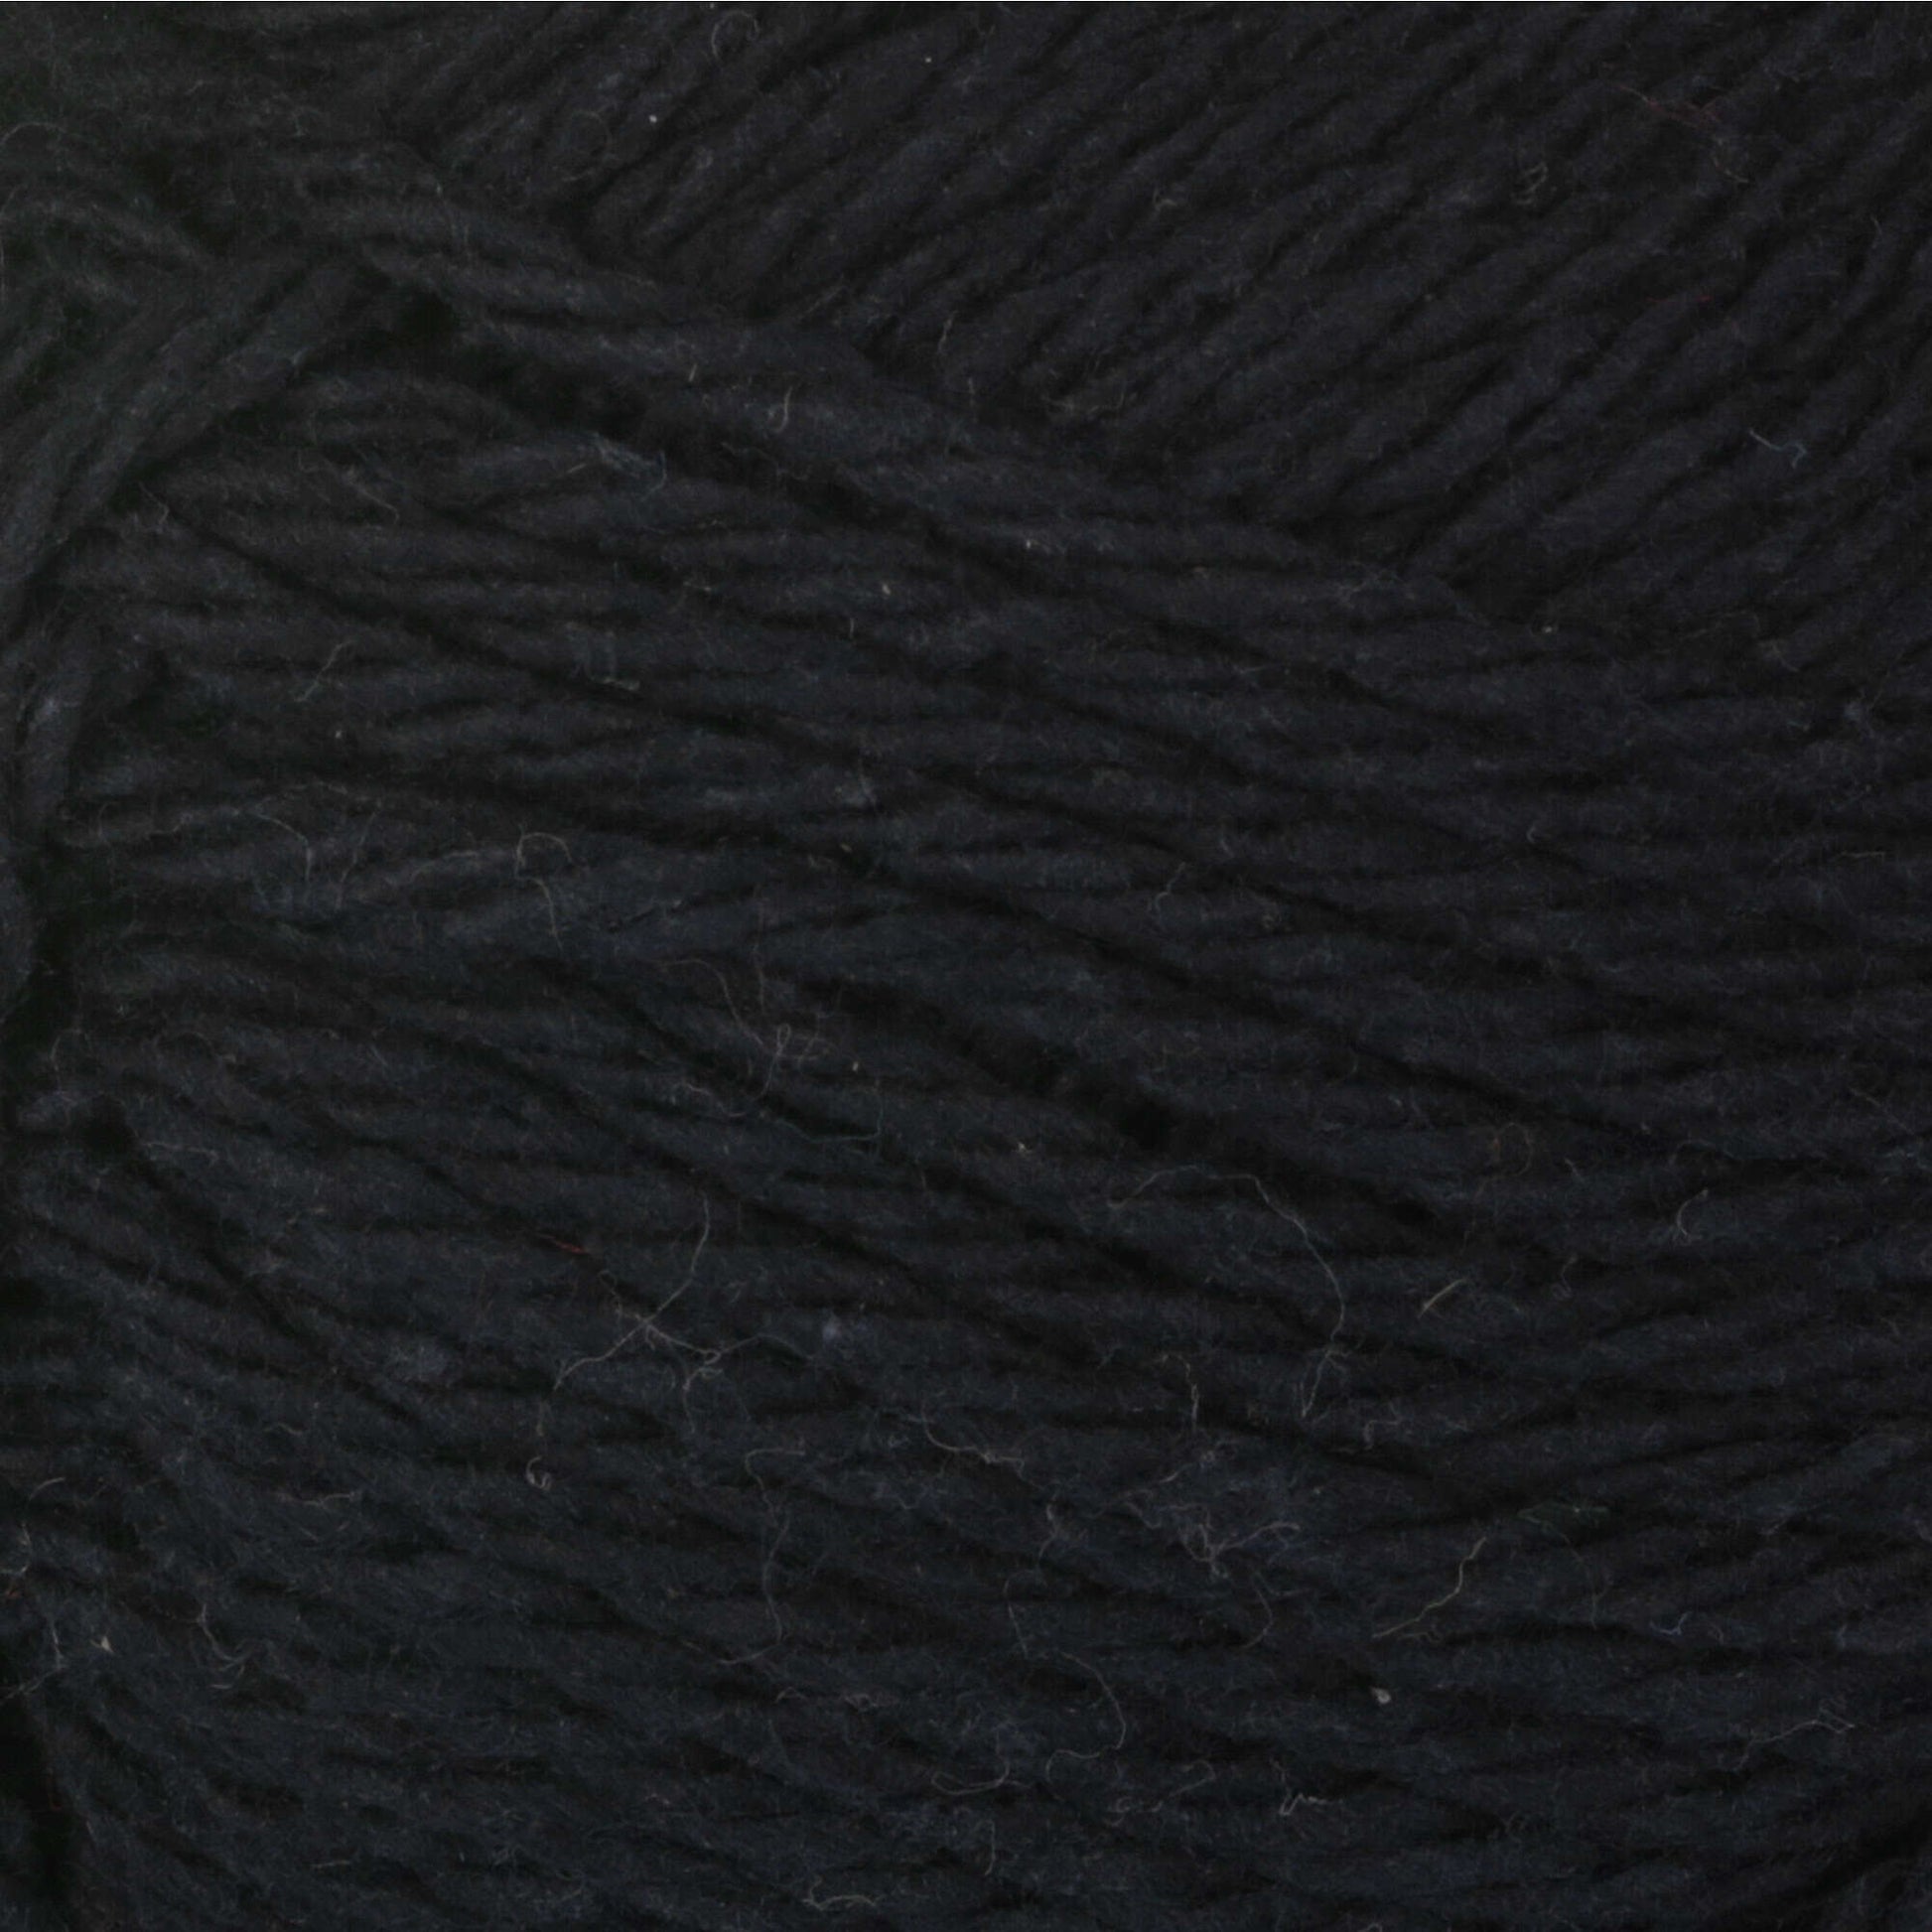 Bernat Handicrafter #4 Medium Cotton Yarn, Mod Blue 1.75oz/50g, 80 Yards (6 Pack), Size: Six-Pack